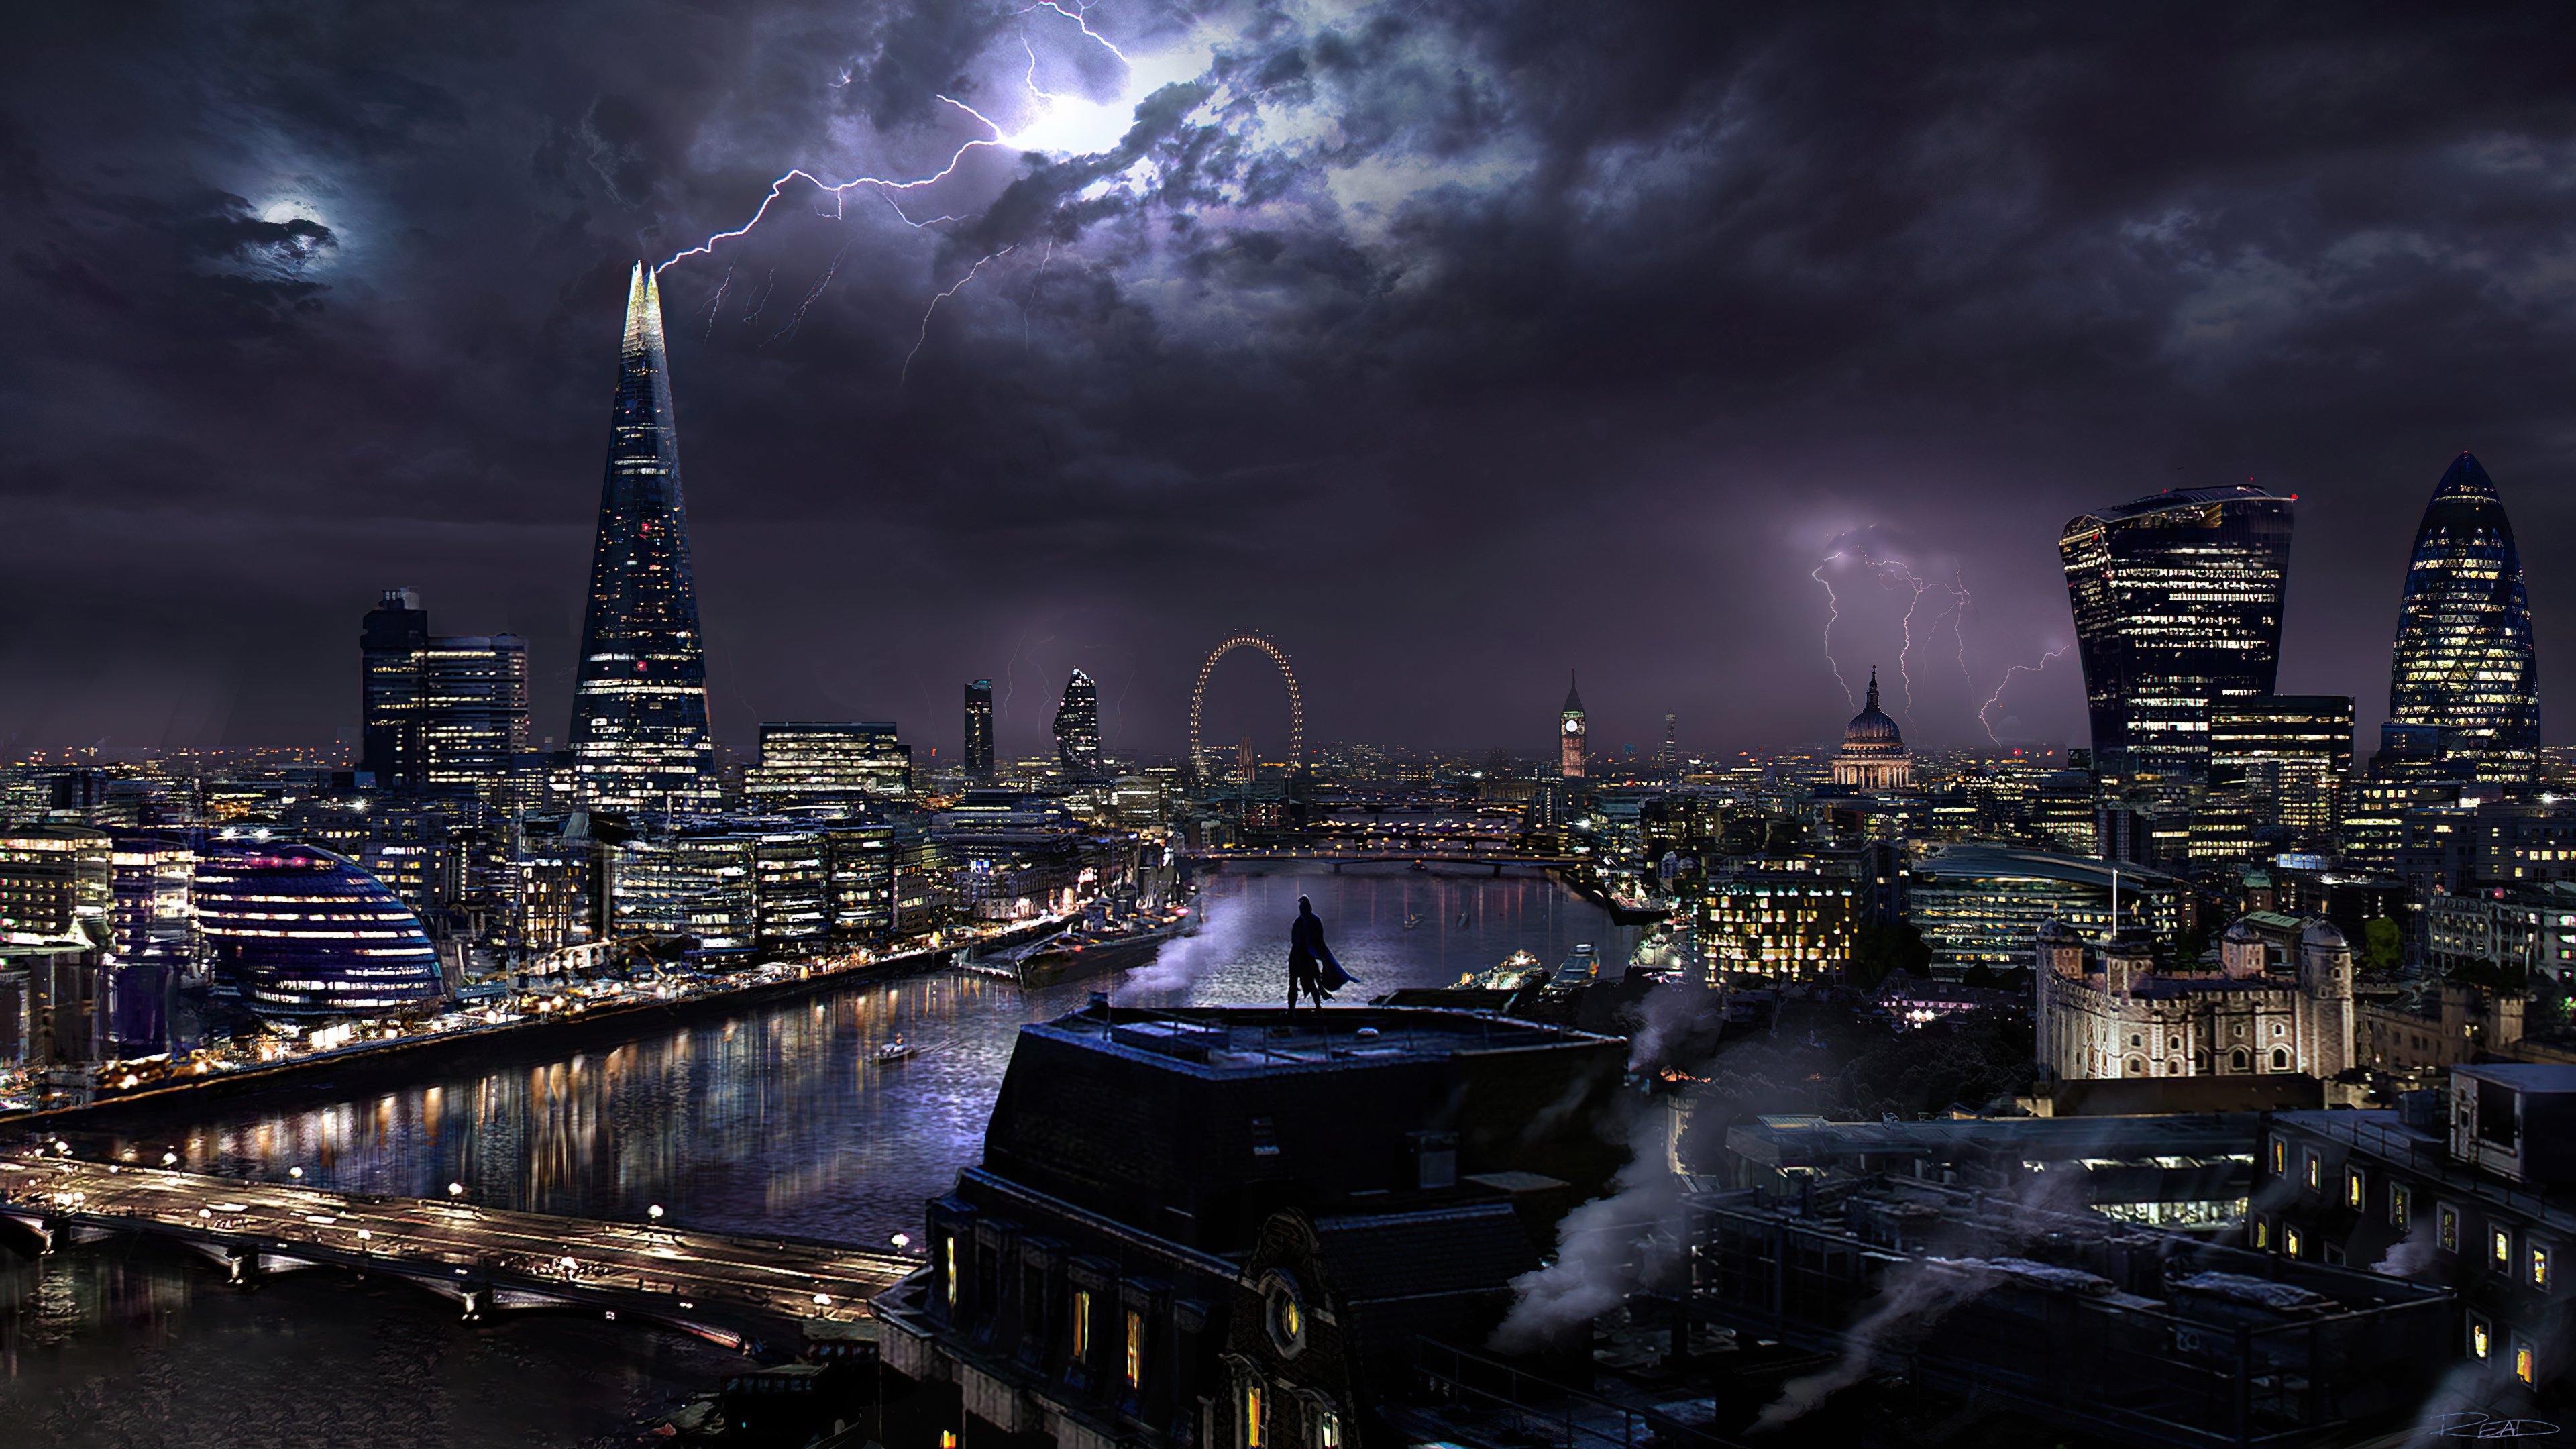 Fondos de pantalla Moon Knight in London